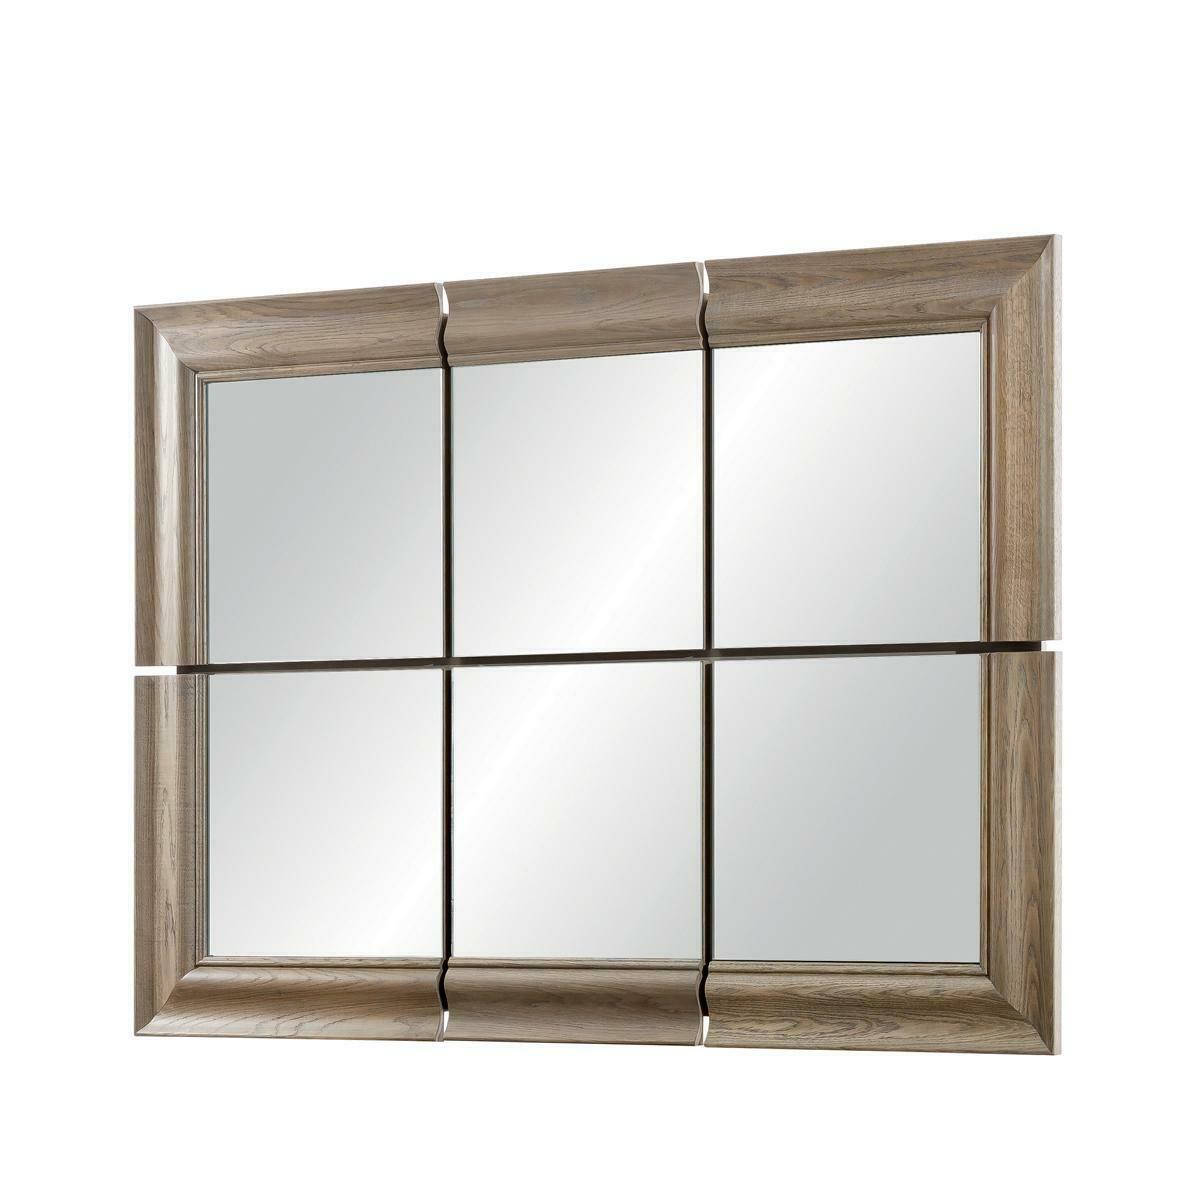 Moderner Großer Spiegel Wandspiegel Echt Holz Rahmen Deko Hängespiegel